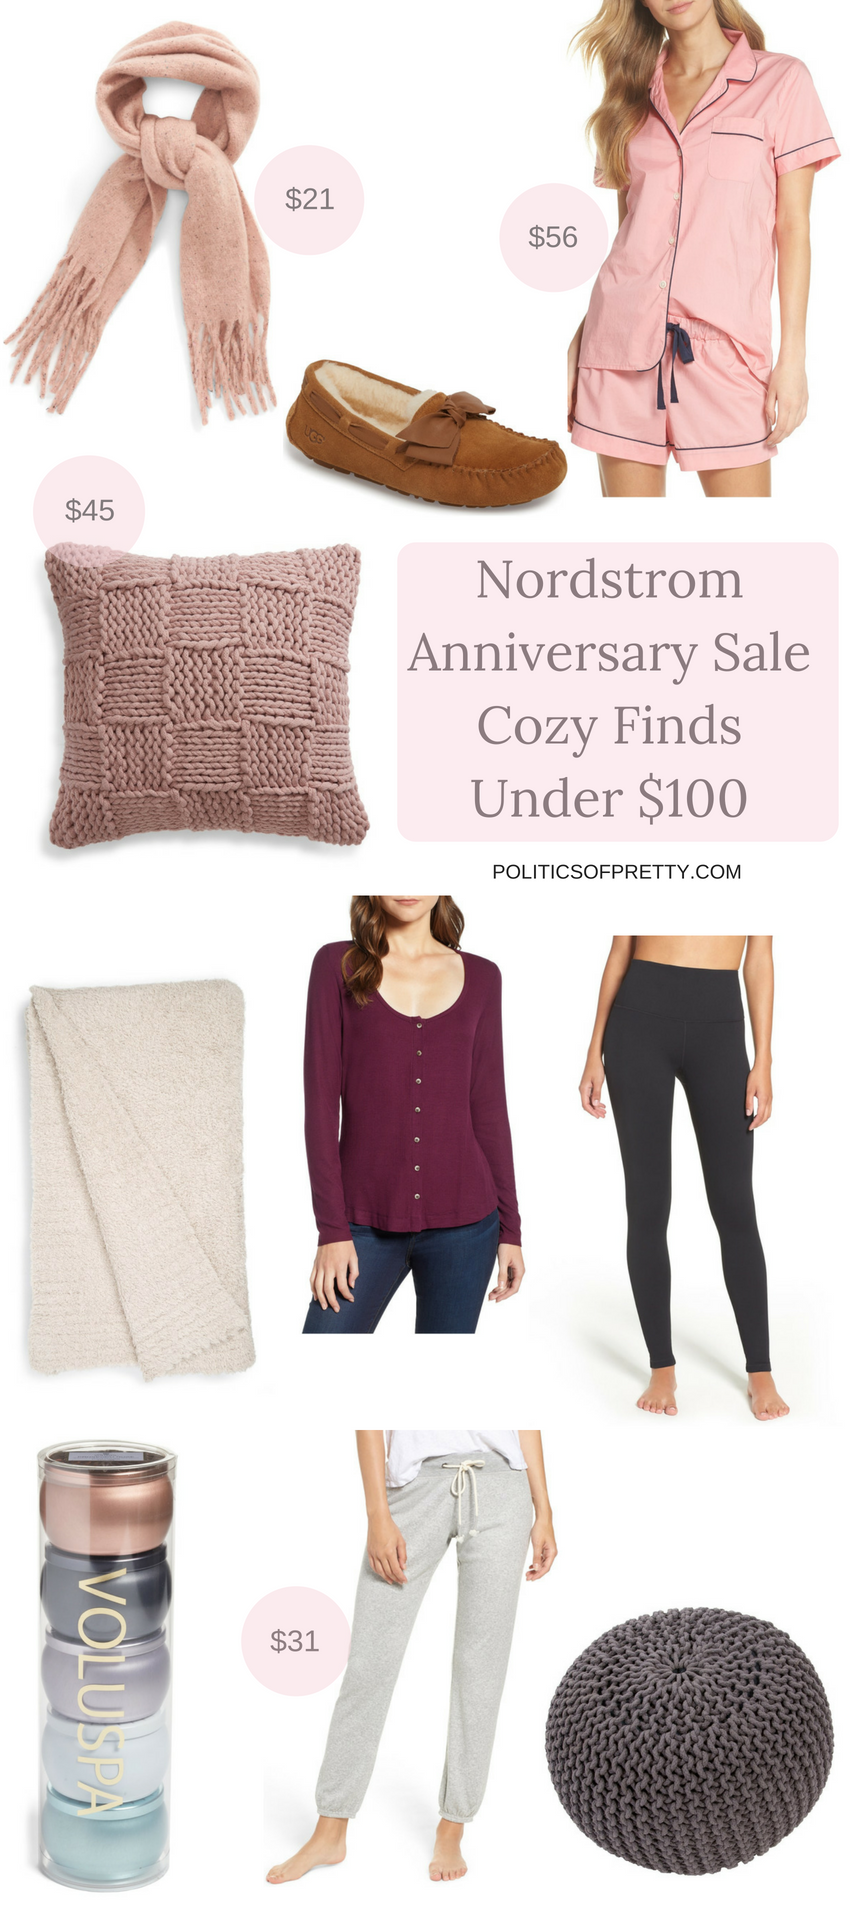 Nordstrom Anniversary Sale cozy finds under $100, loungewear and sleepwear under $100, nordstrom anniversary sale picks